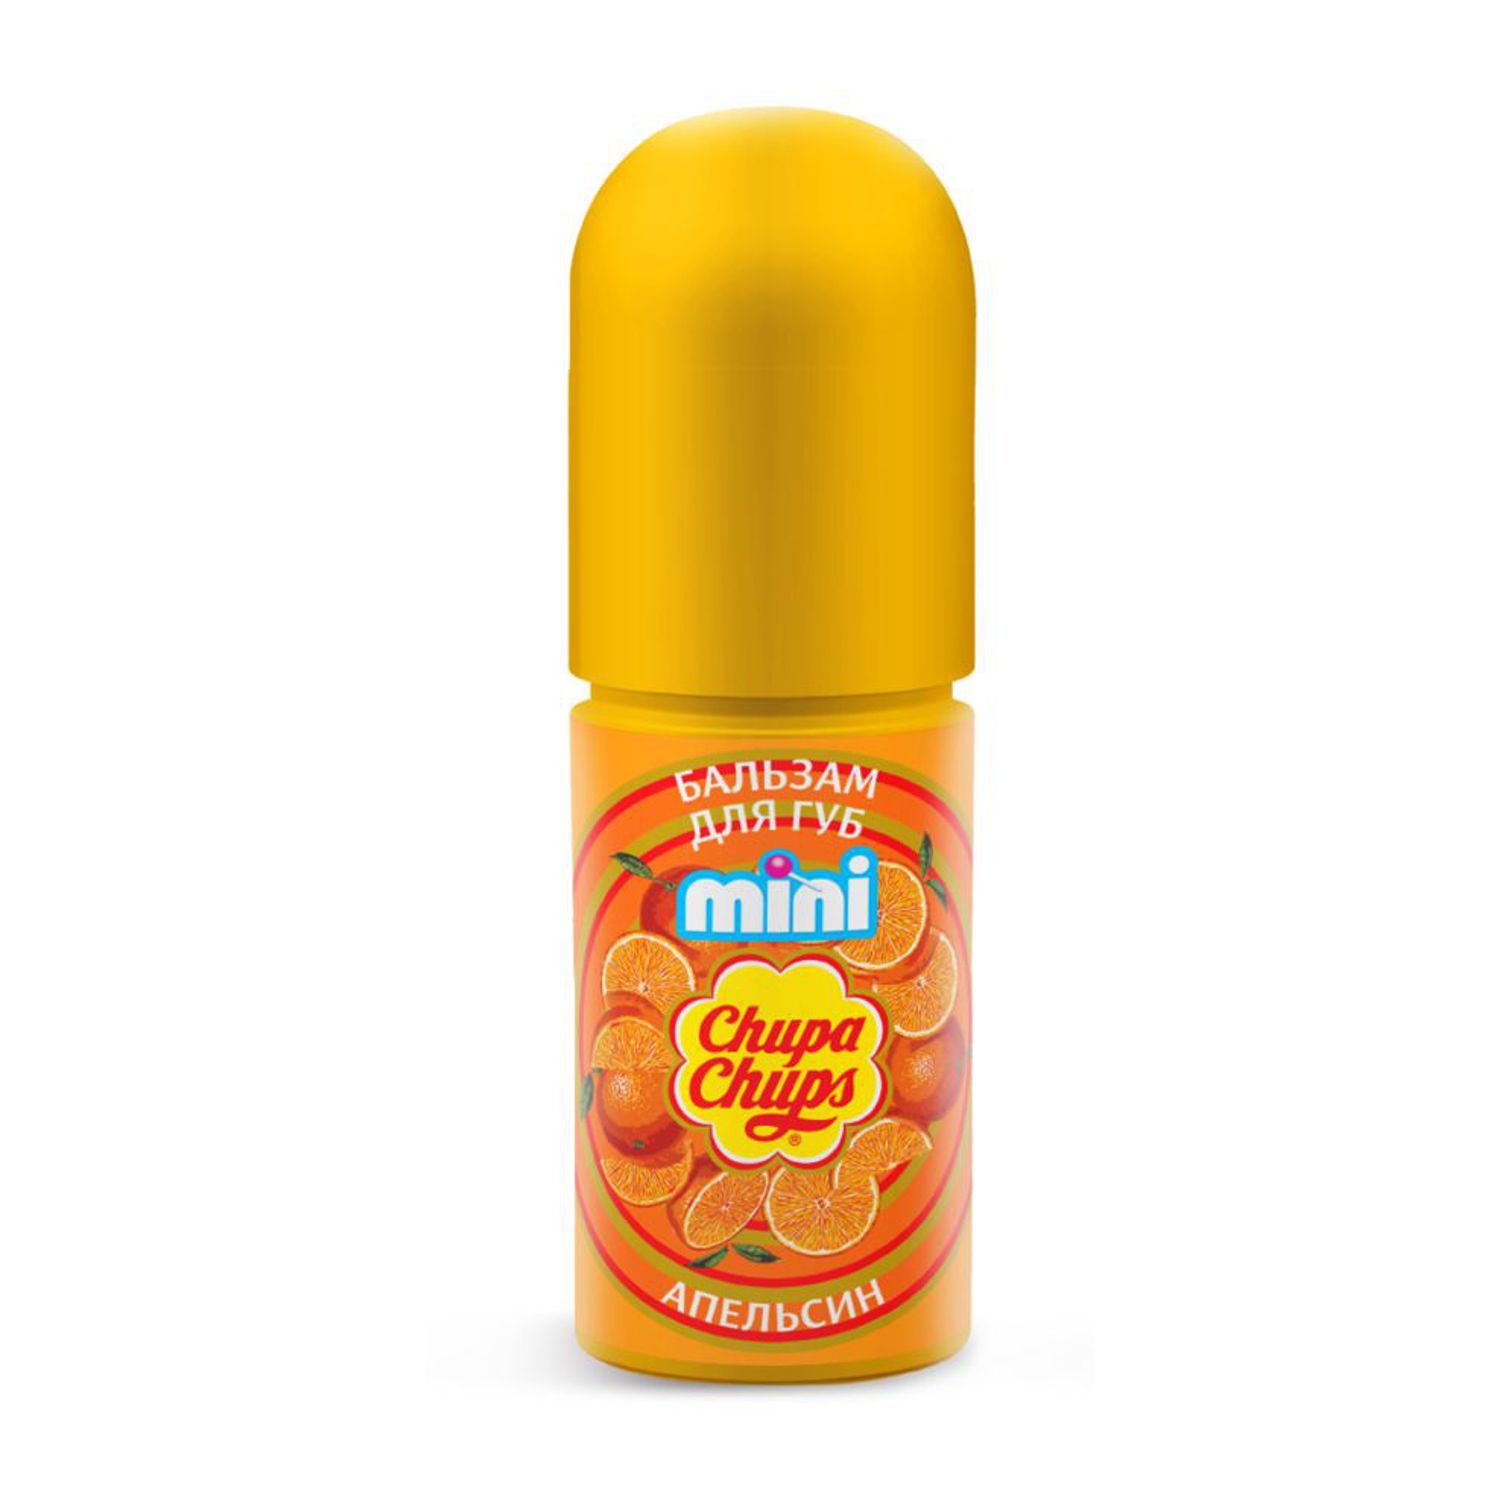 Бальзам для губ Chupa Chups mini (апельсин) бальзам для губ chupa chups mini апельсин 3 8 г